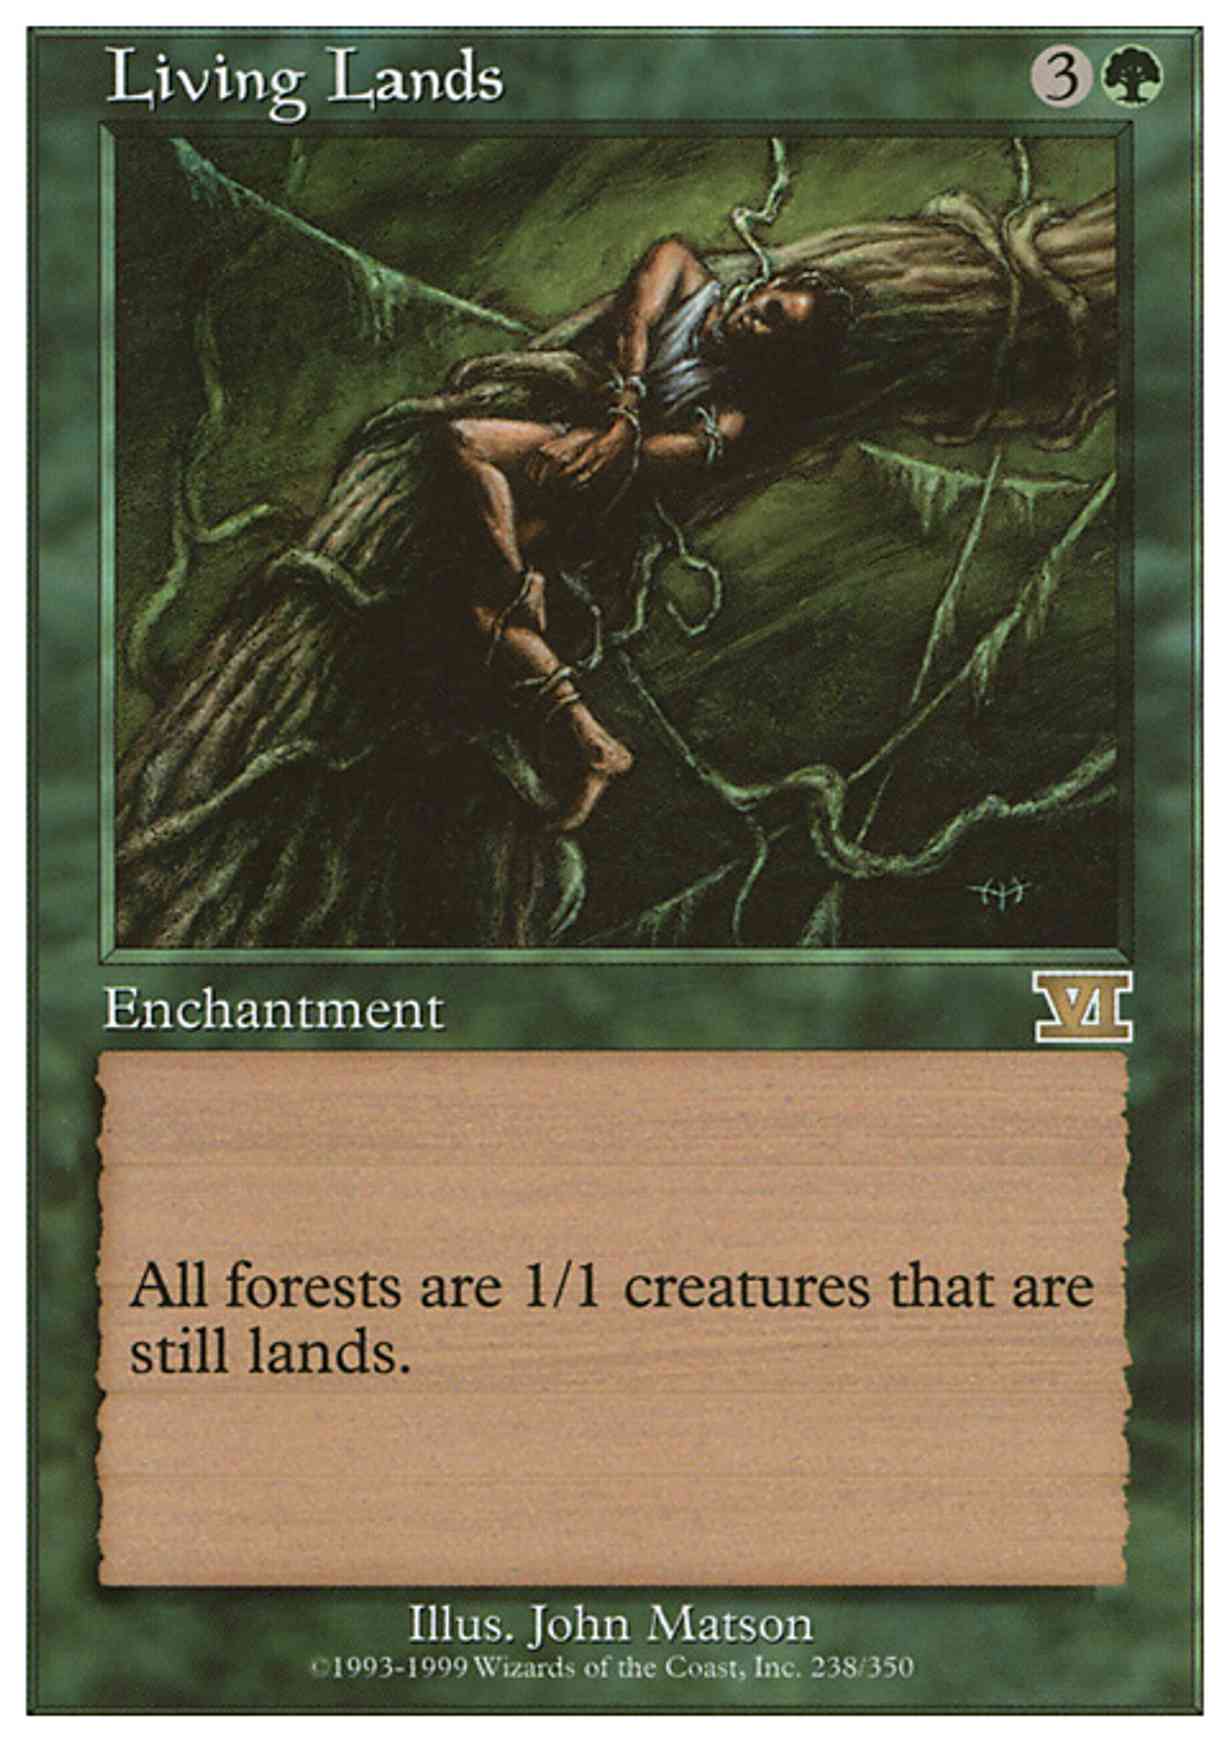 Living Lands magic card front